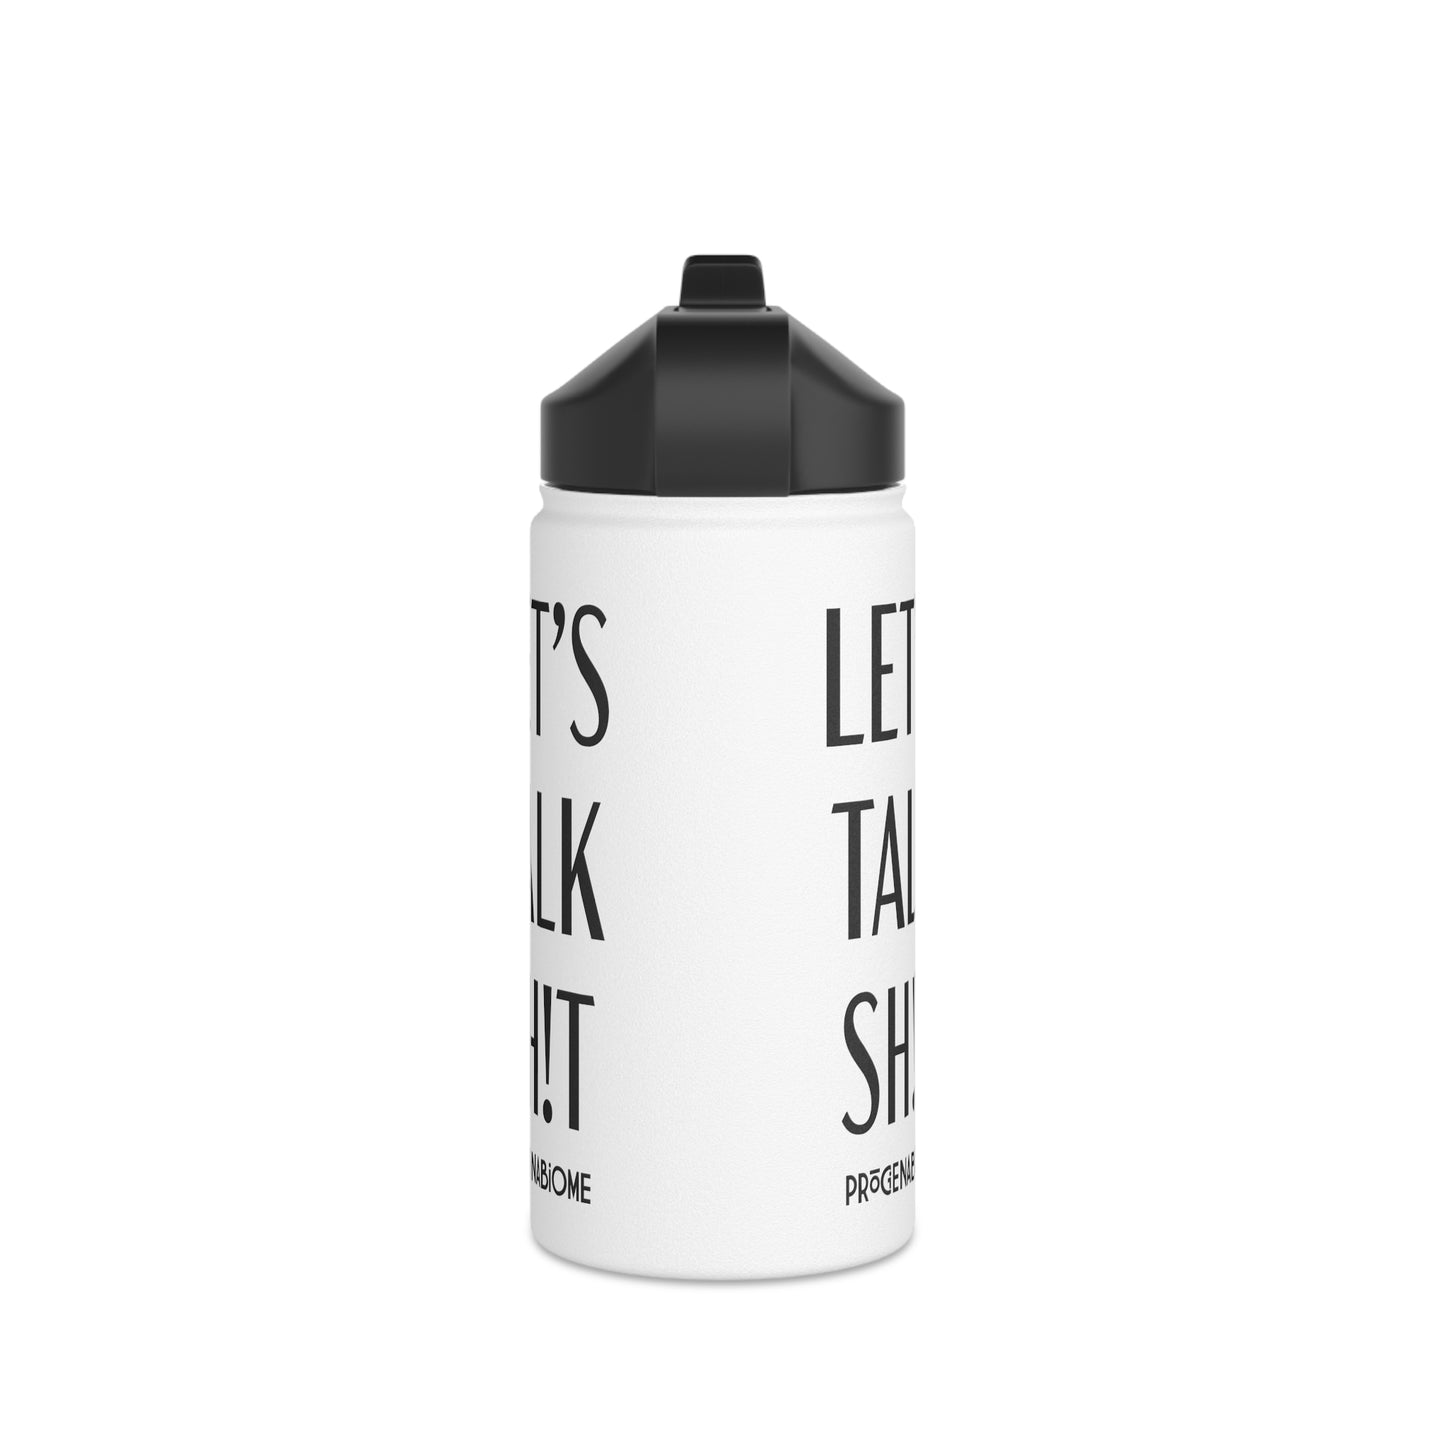 Let's Talk Sh!t Stacked Stainless Steel Water Bottle, Standard Lid